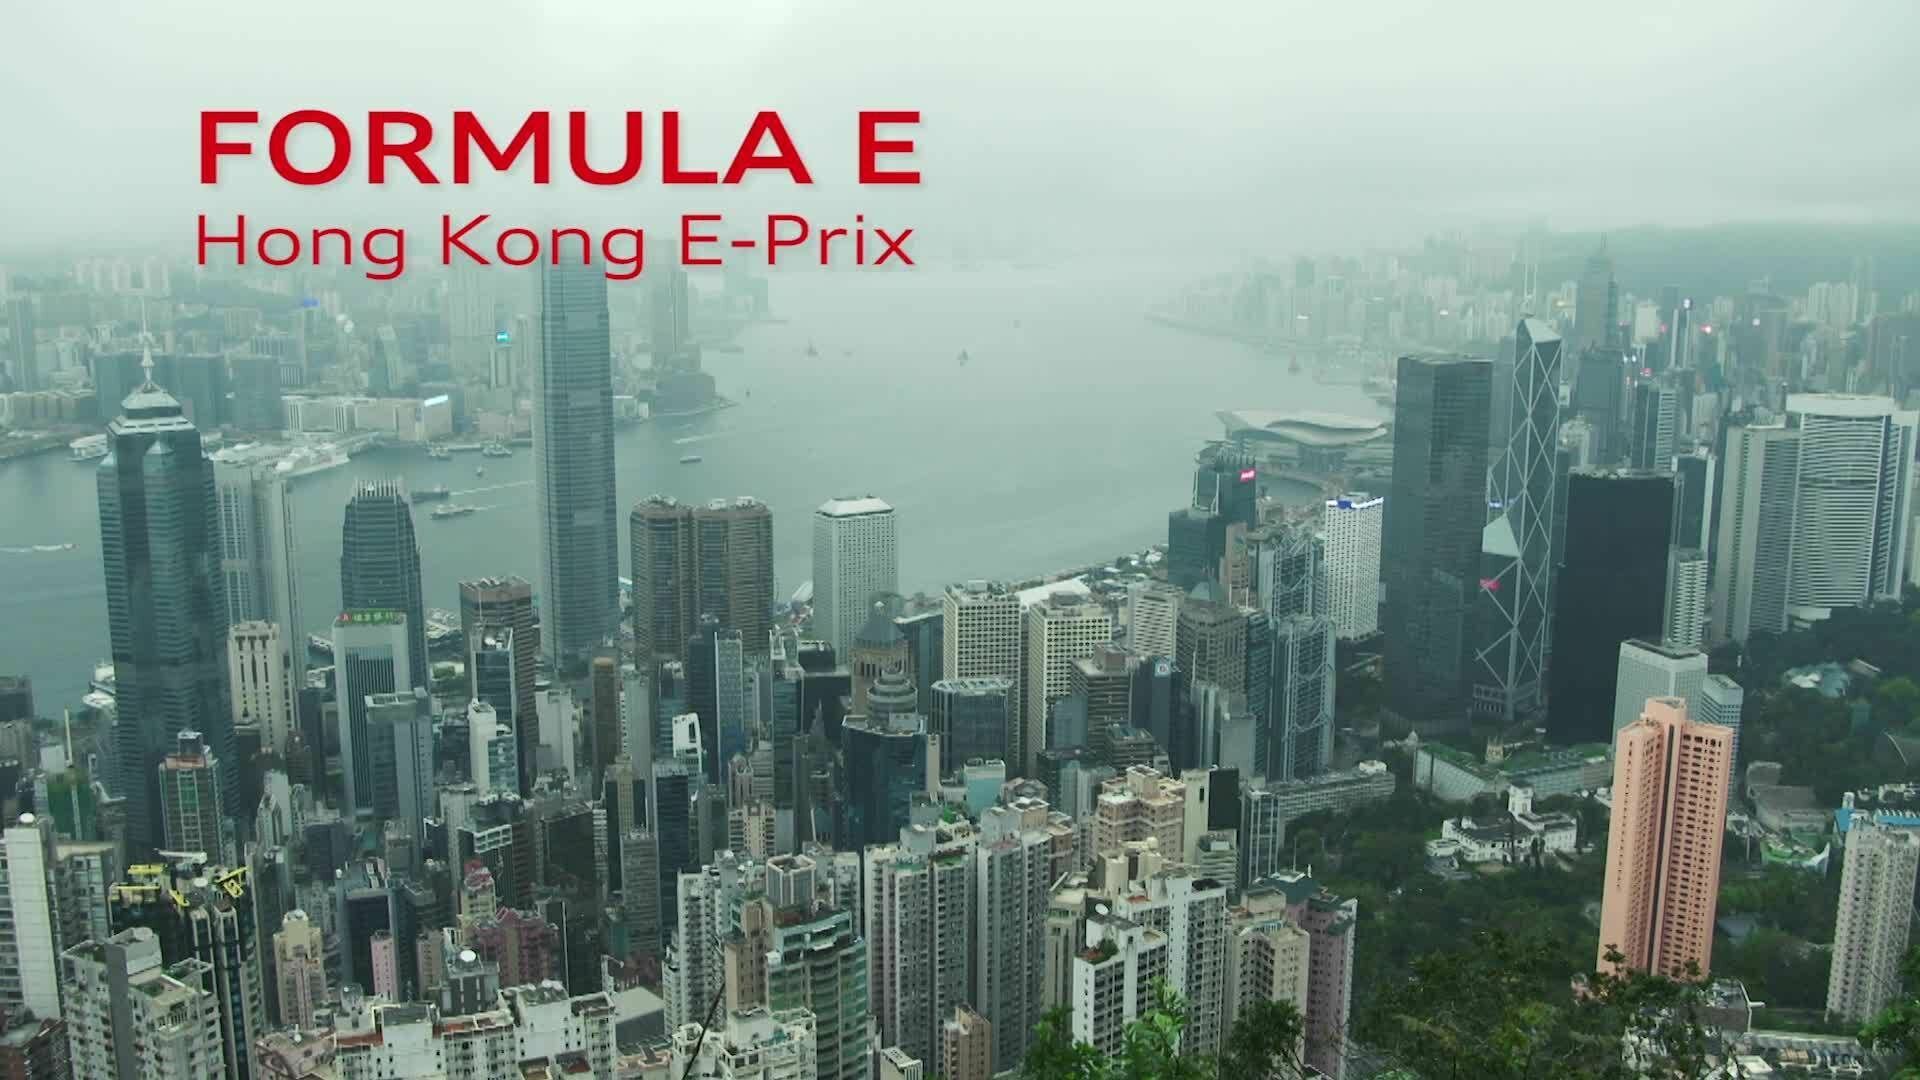 Welcome to Hong Kong: The 50th Formula E race